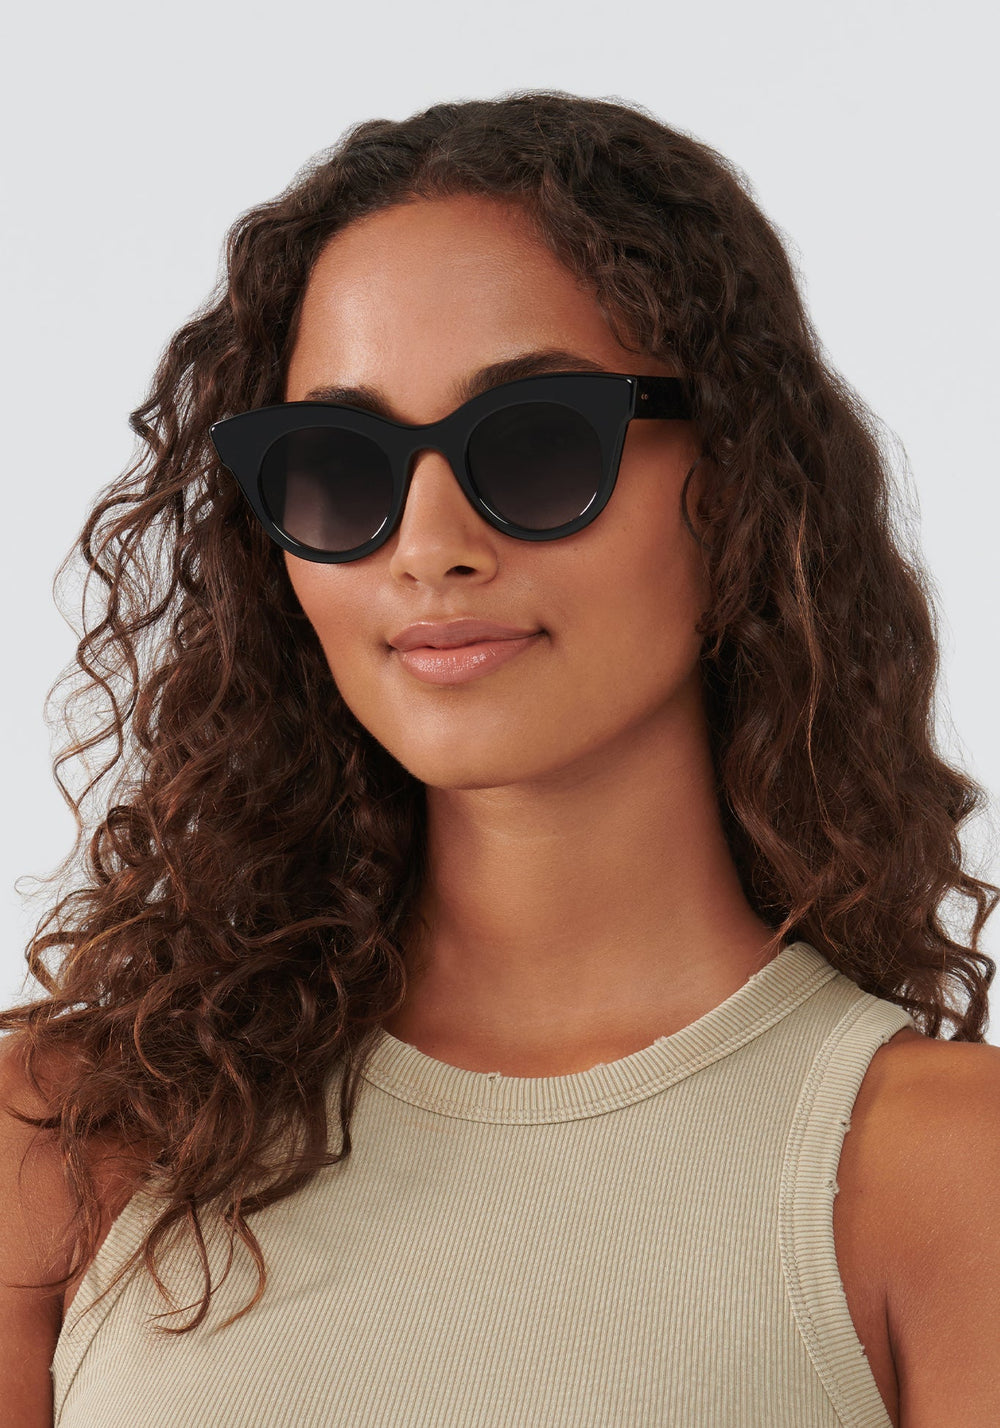 KREWE - OLIVIA | Black + Black and Crystal handcrafted, luxury black cat eye sunglasses womens model | Model: Meli